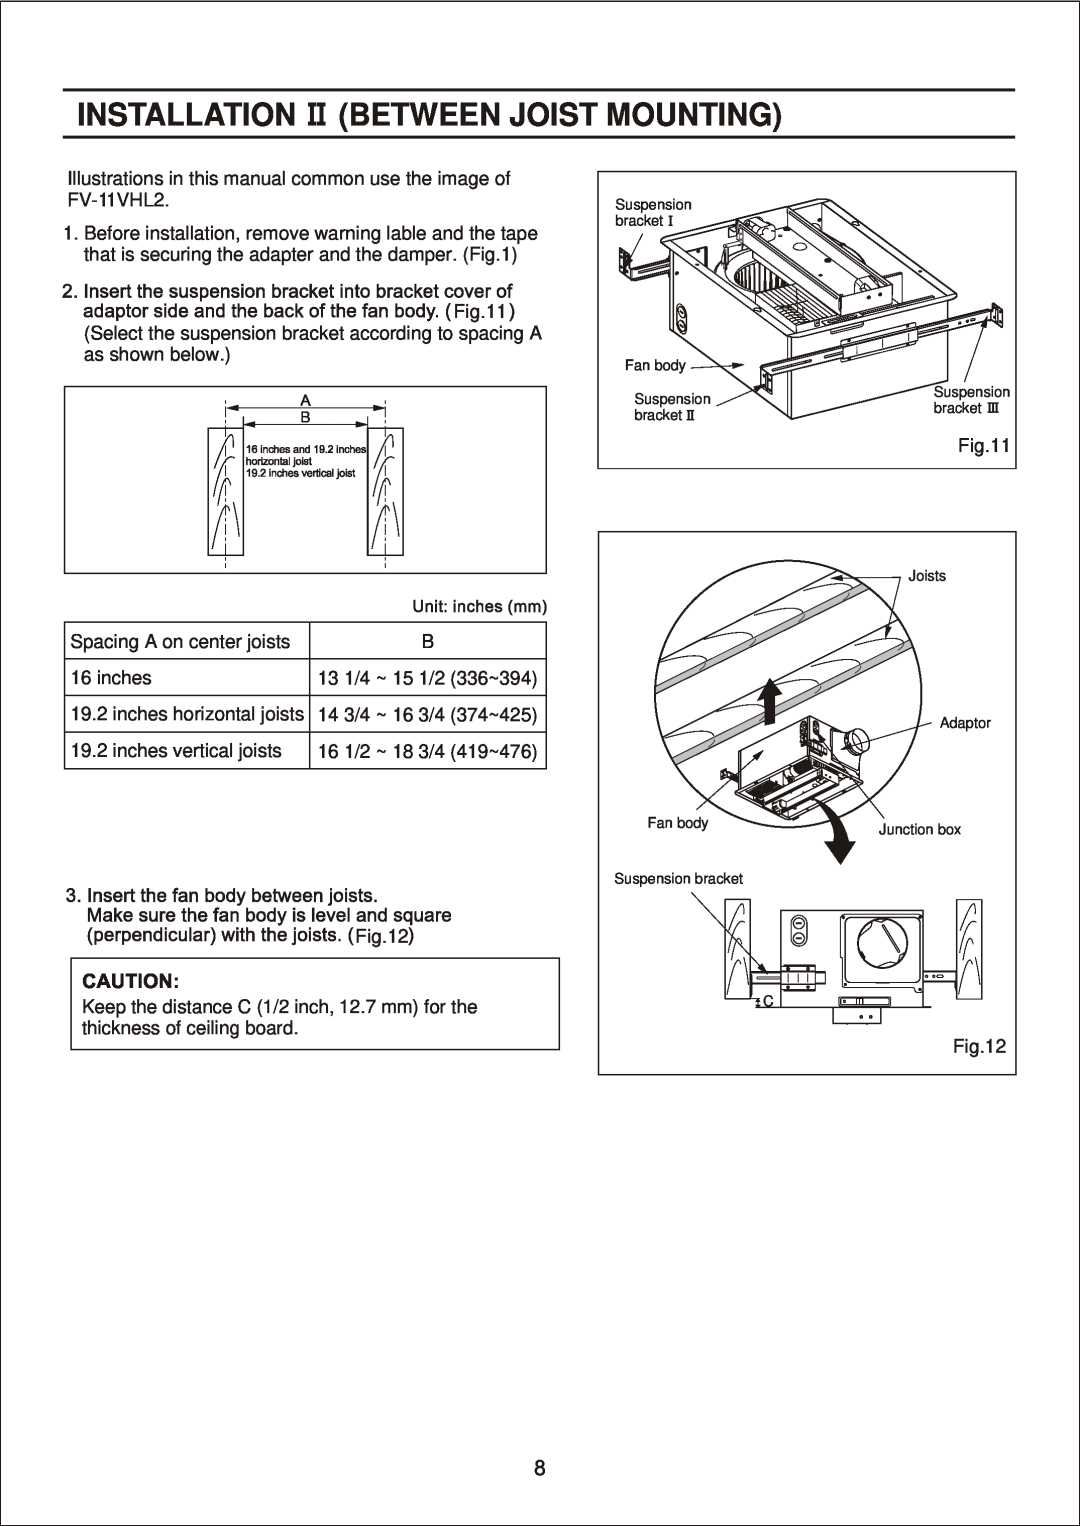 Panasonic FV-11VH2 manual Installation Between Joist Mounting, 13 1/4 ~ 15 1/2 336~394, inches horizontal joists 